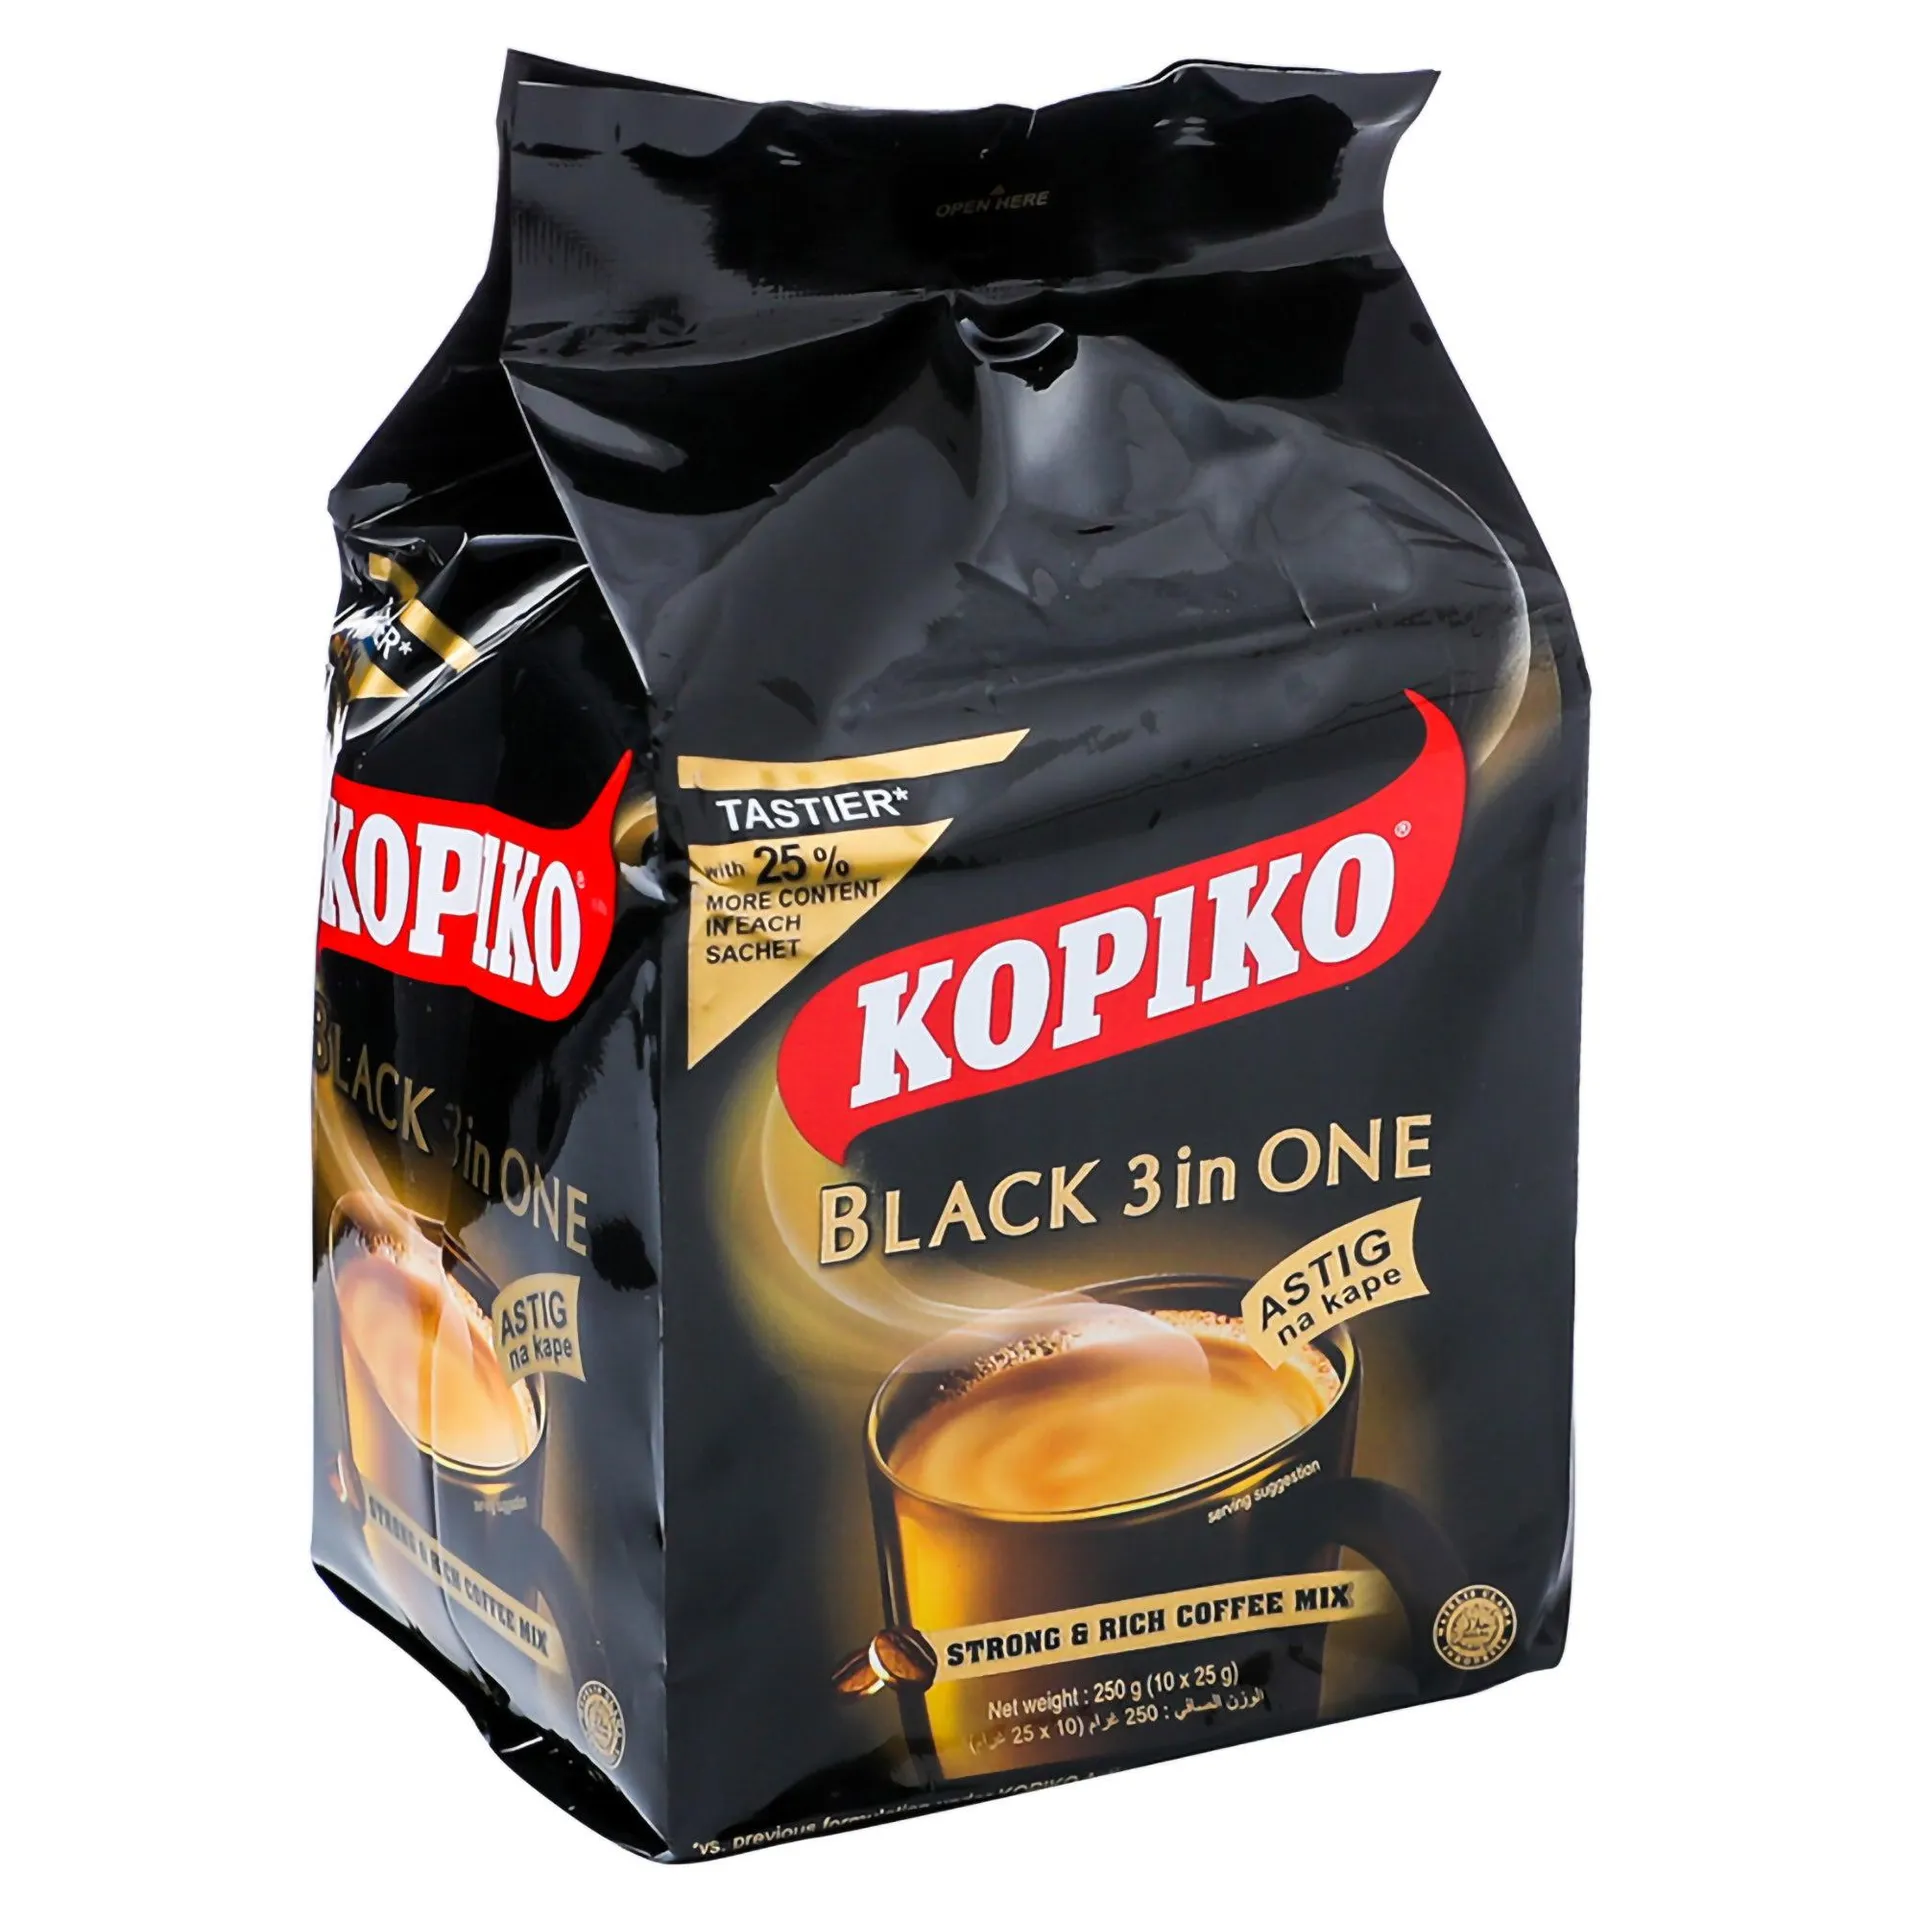 Kopiko Black 3in One Coffee 30g 10pk